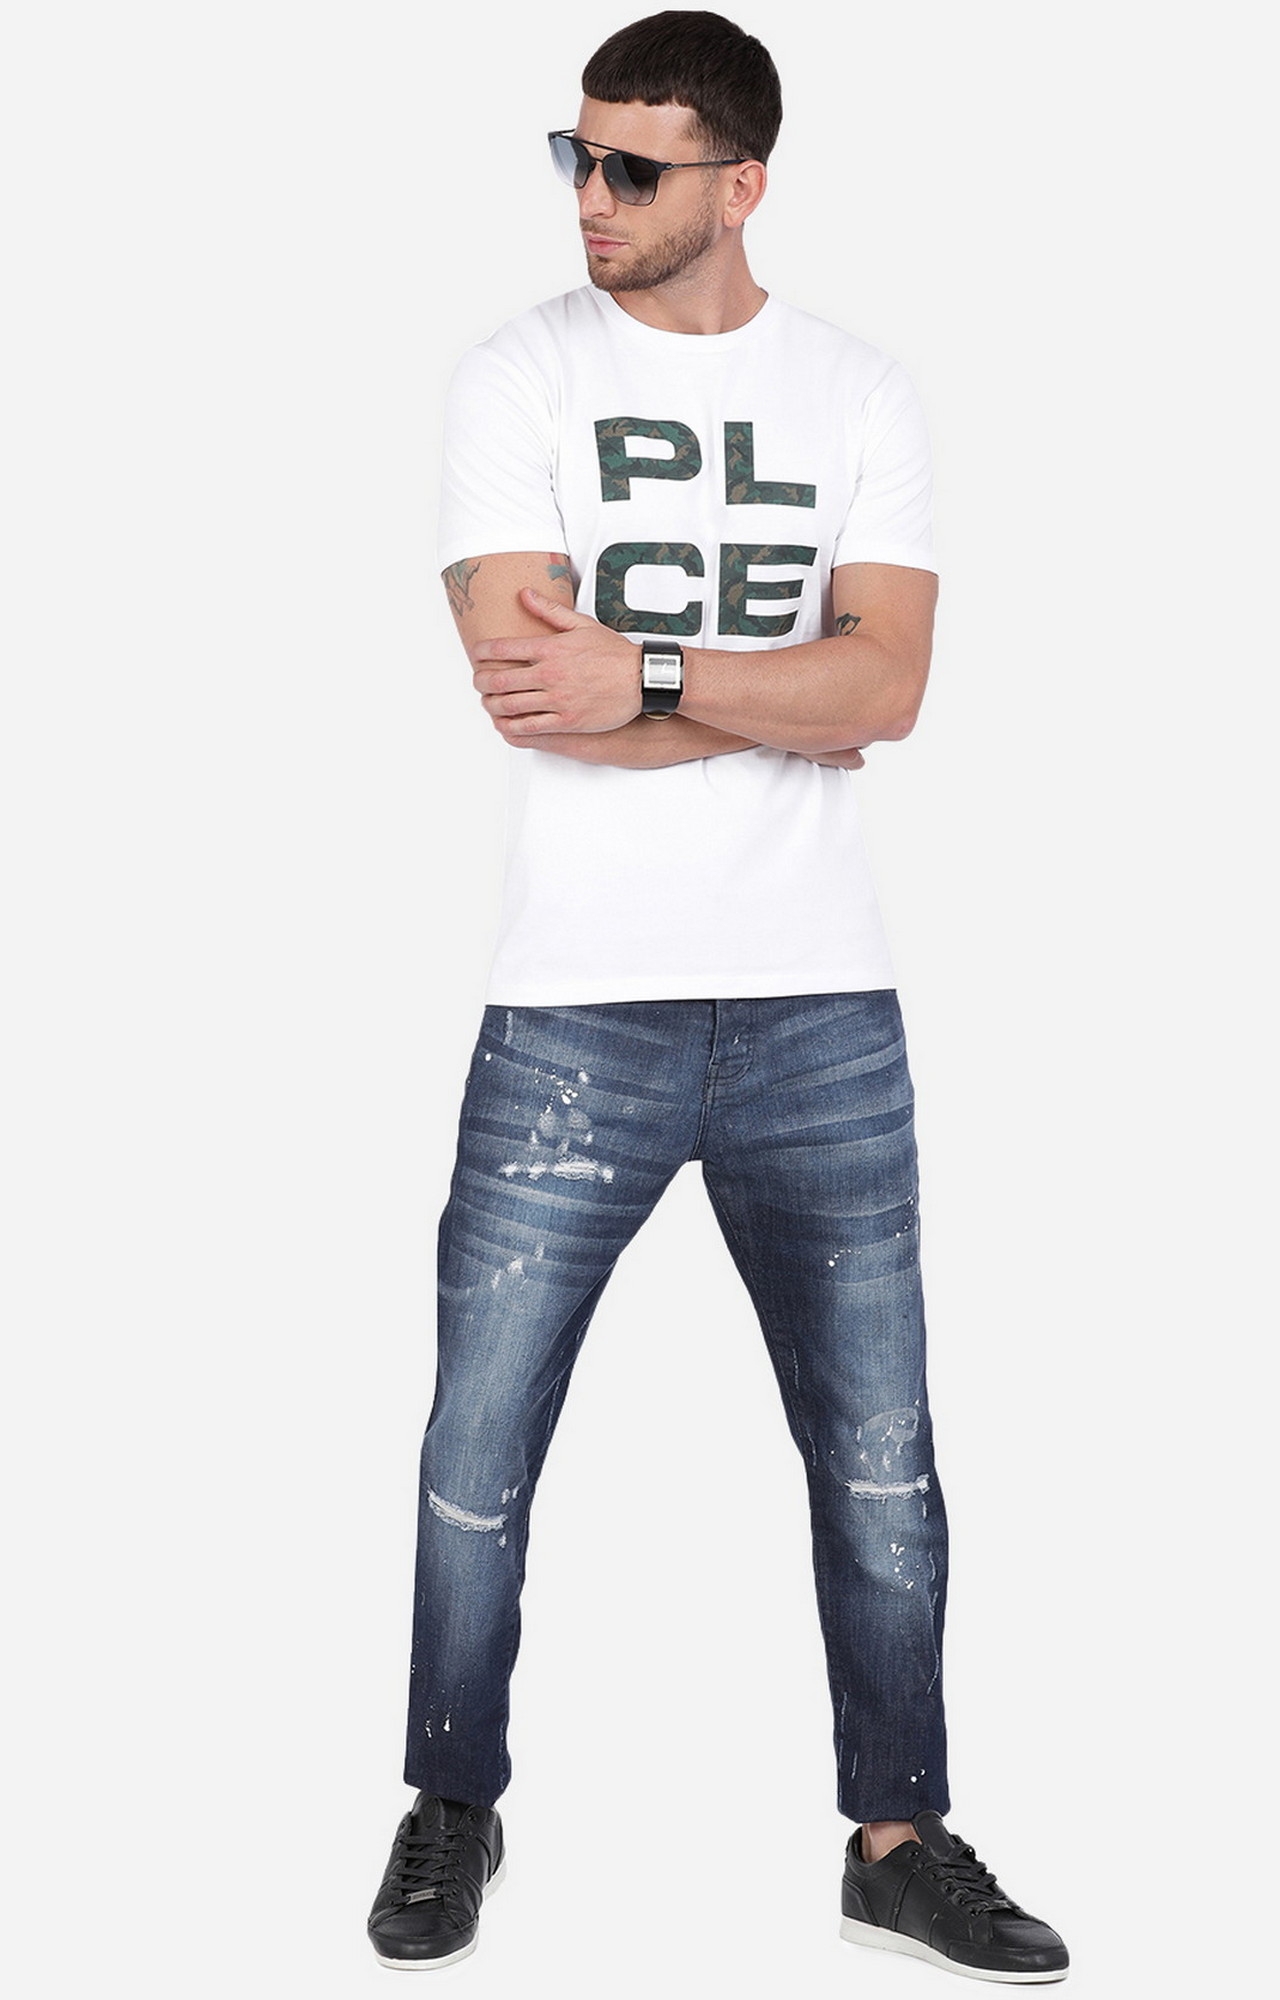 883 Police | Men's White Cotton Typographic Printed T-Shirt 6